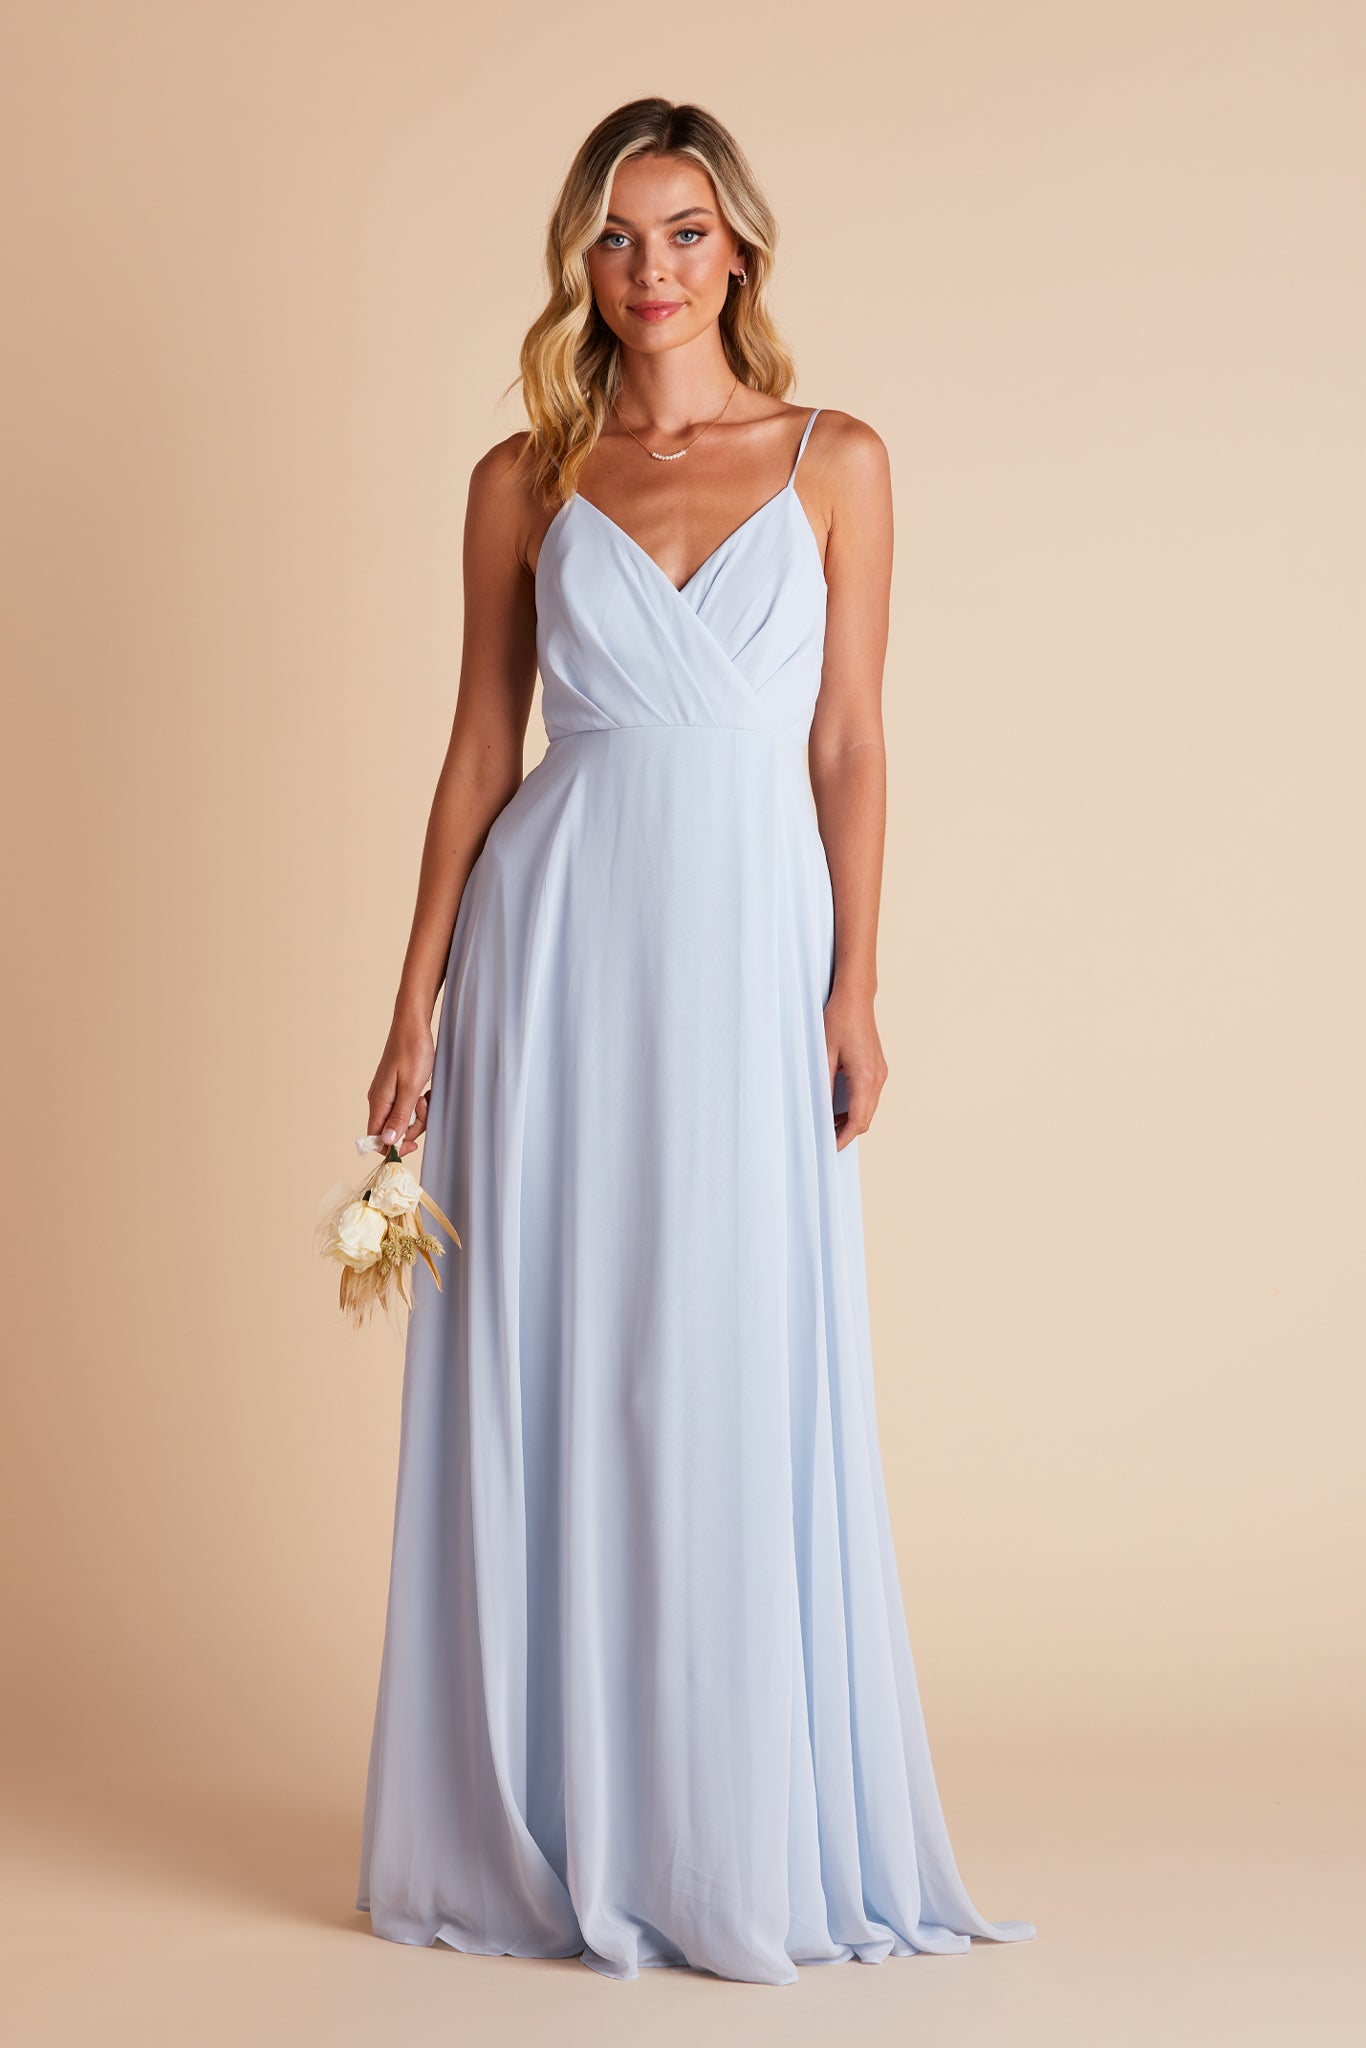 Royal Blue Infinity Dress - Long Royal Blue Convertible Dress